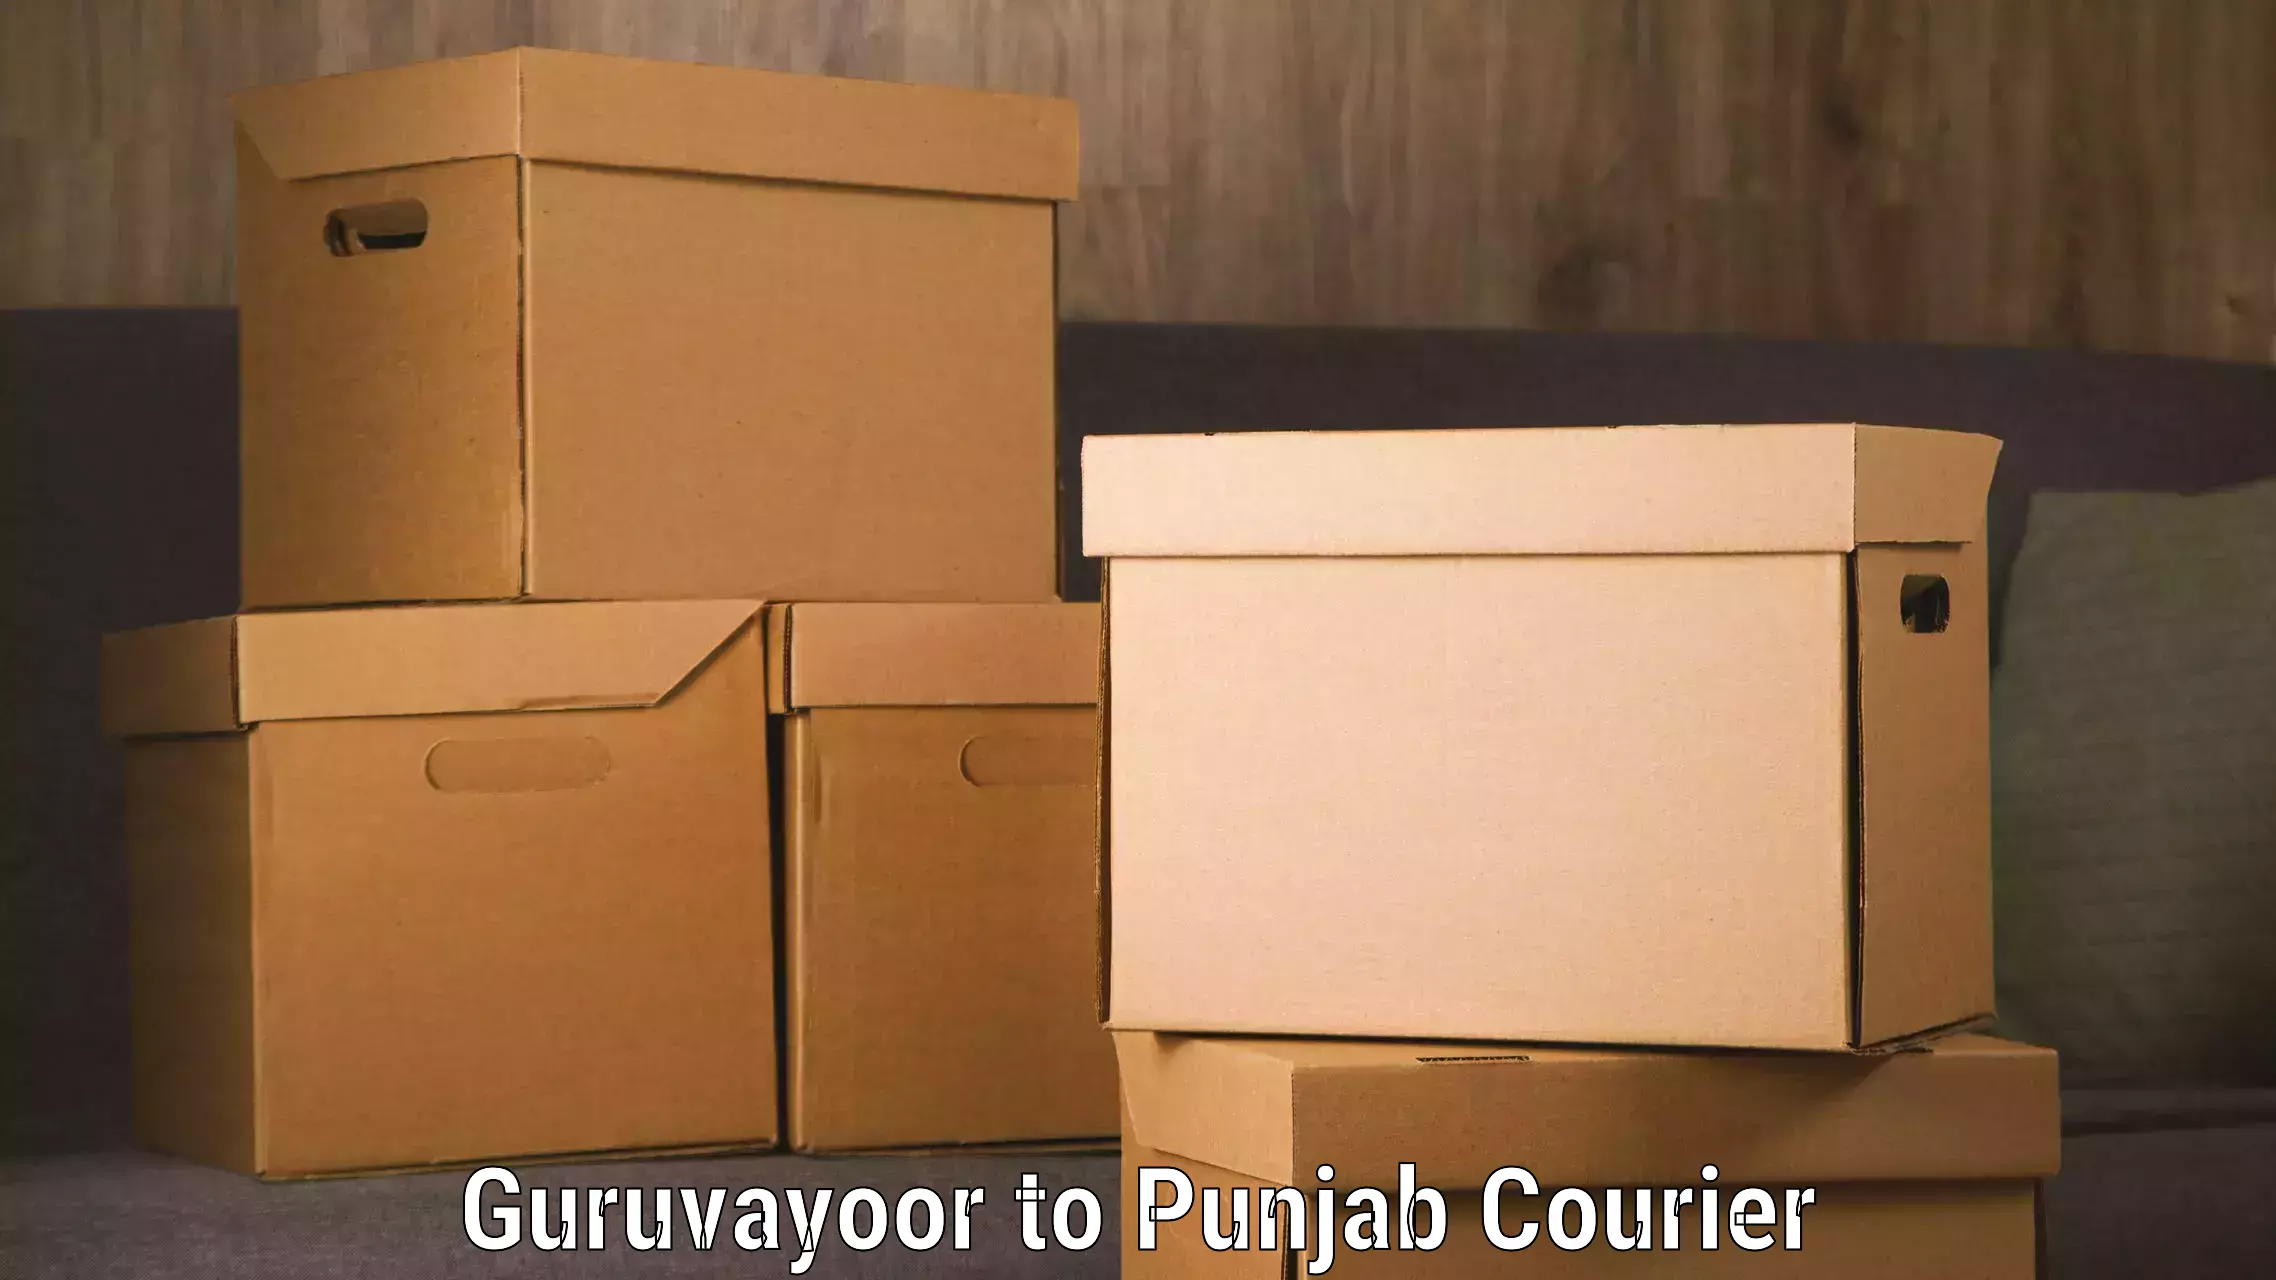 Enhanced tracking features Guruvayoor to Punjab